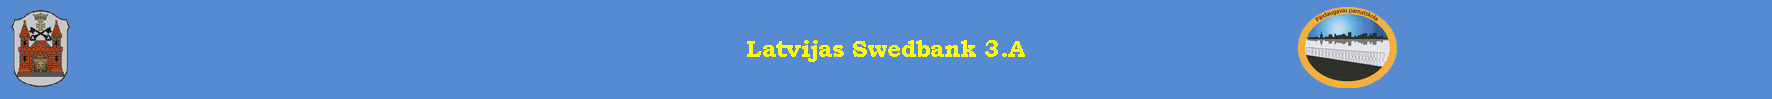 Latvijas Swedbank 3.A